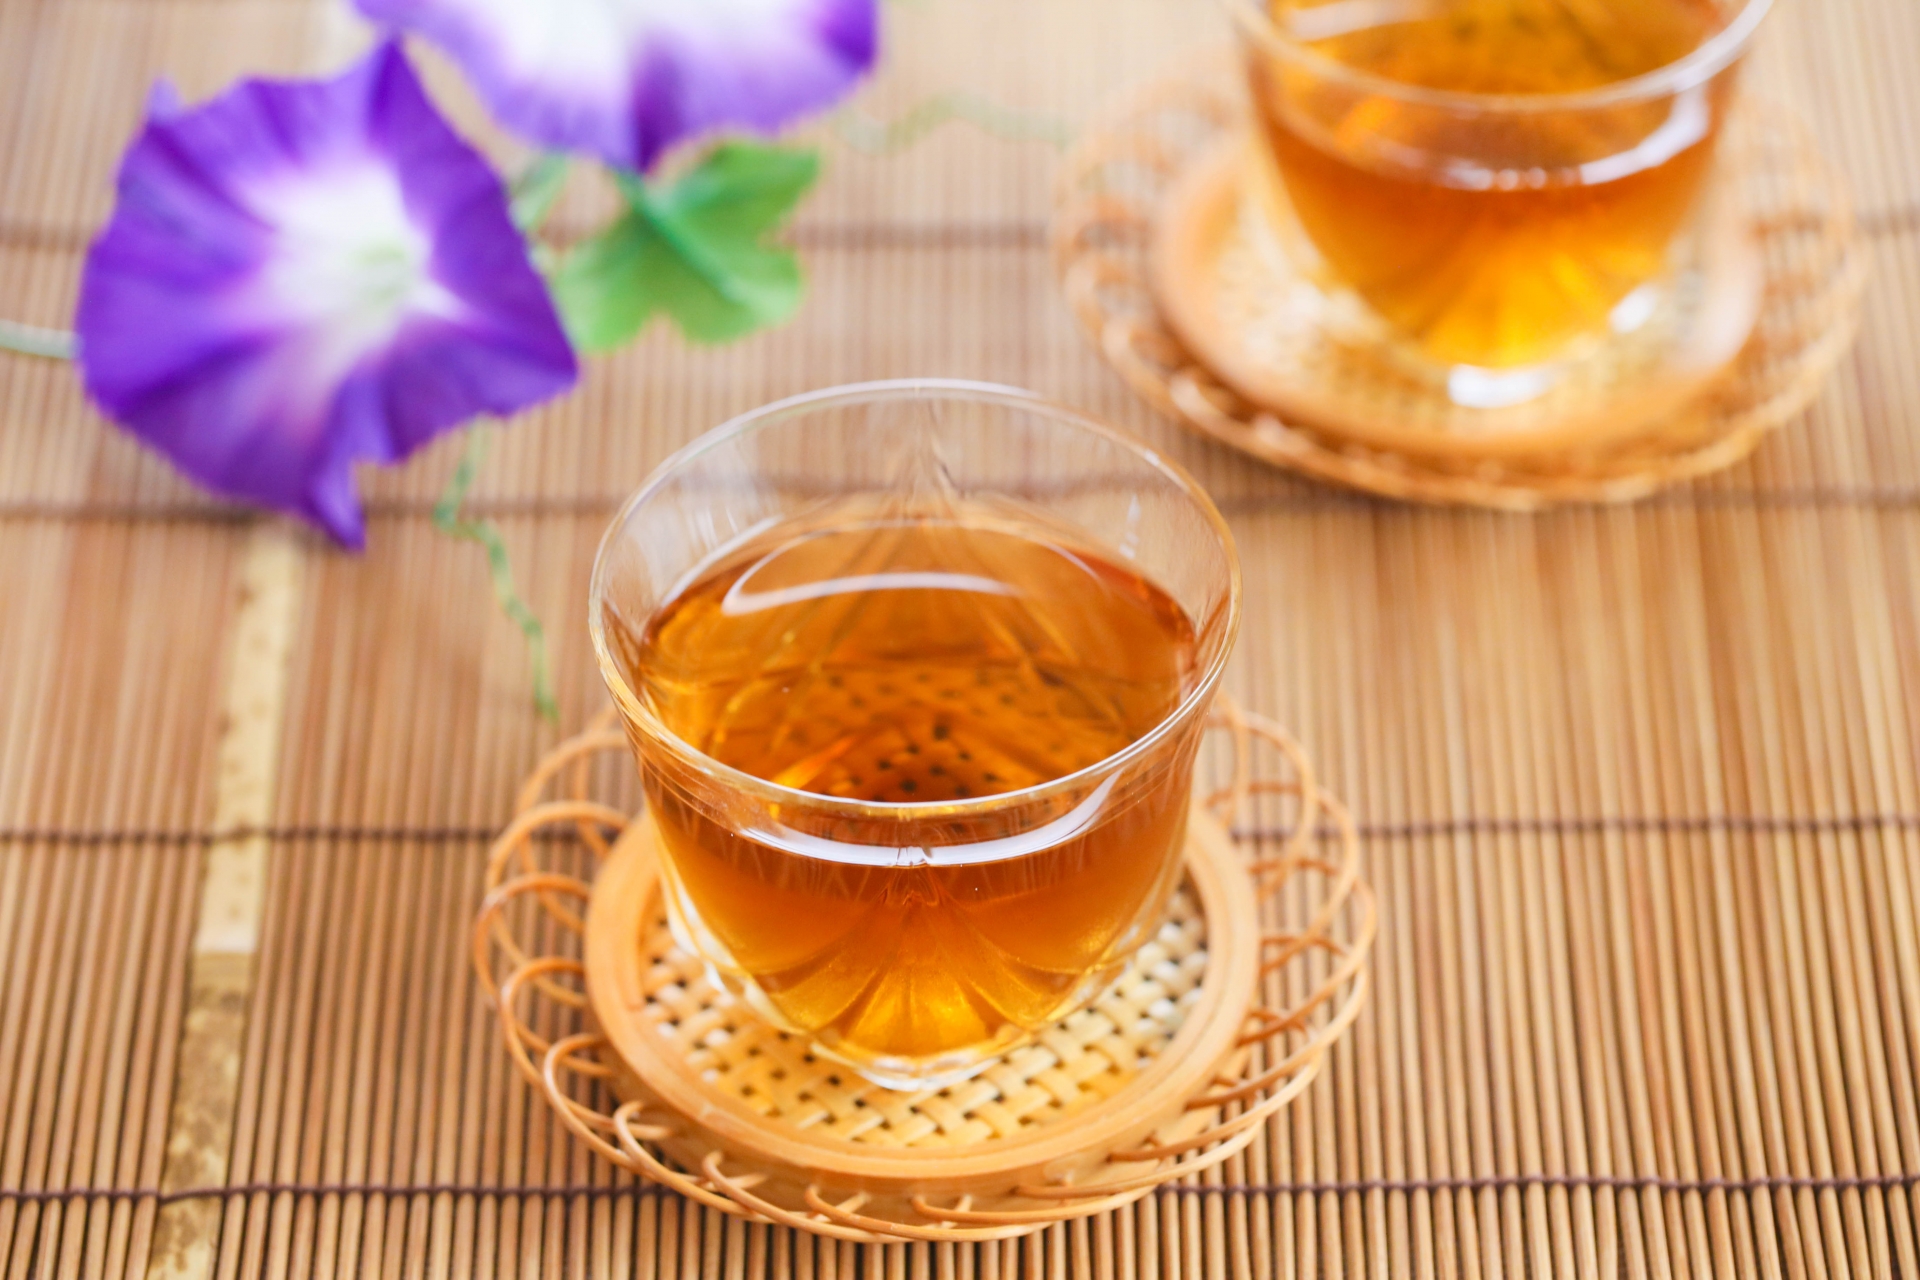 Japanese Barley Tea – a Popular Drink in Summer in Japan